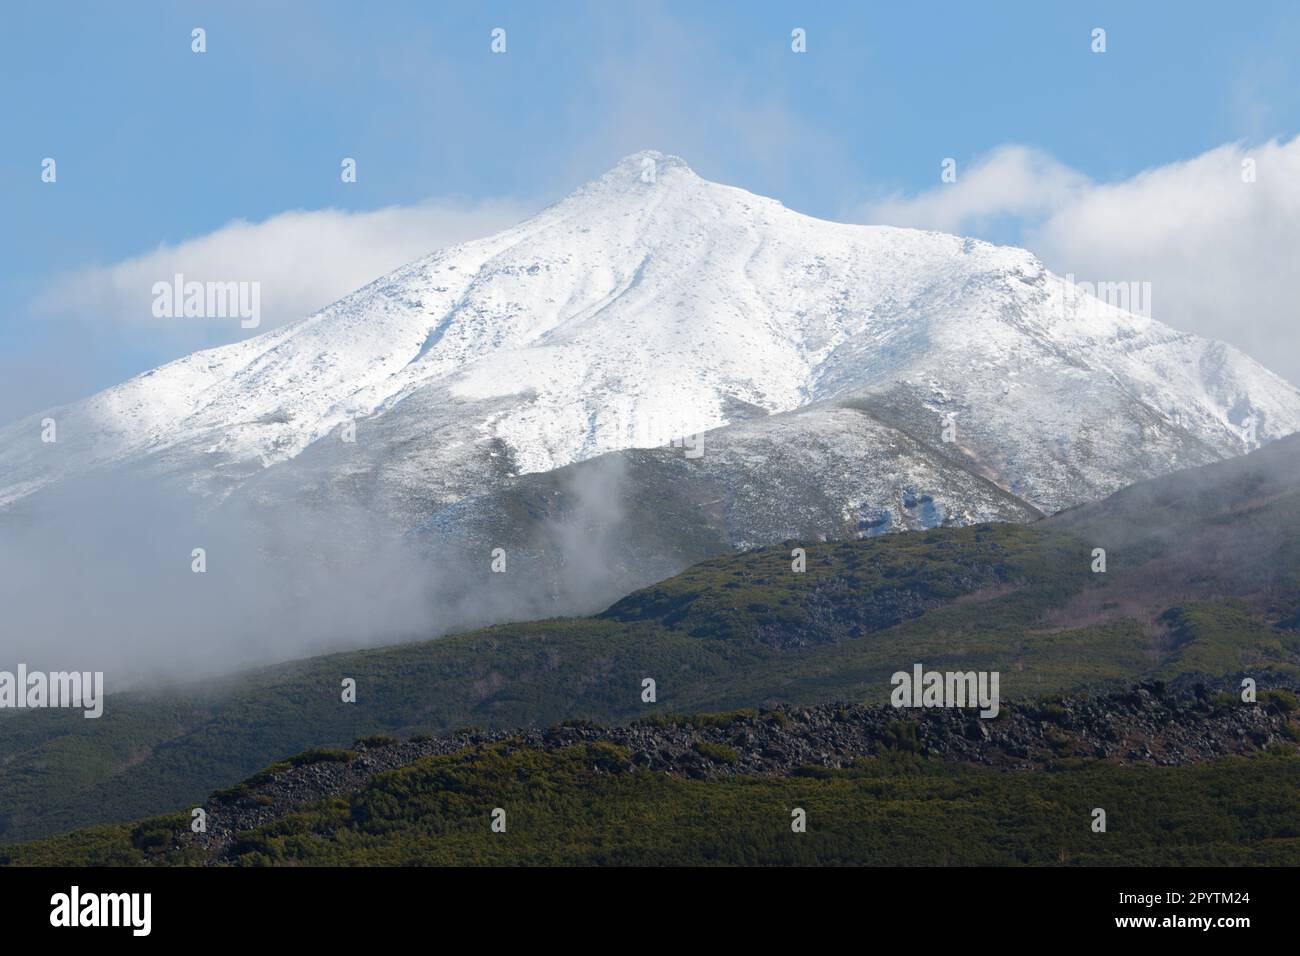 Snow-capped volcano mountain in autumn Stock Photo